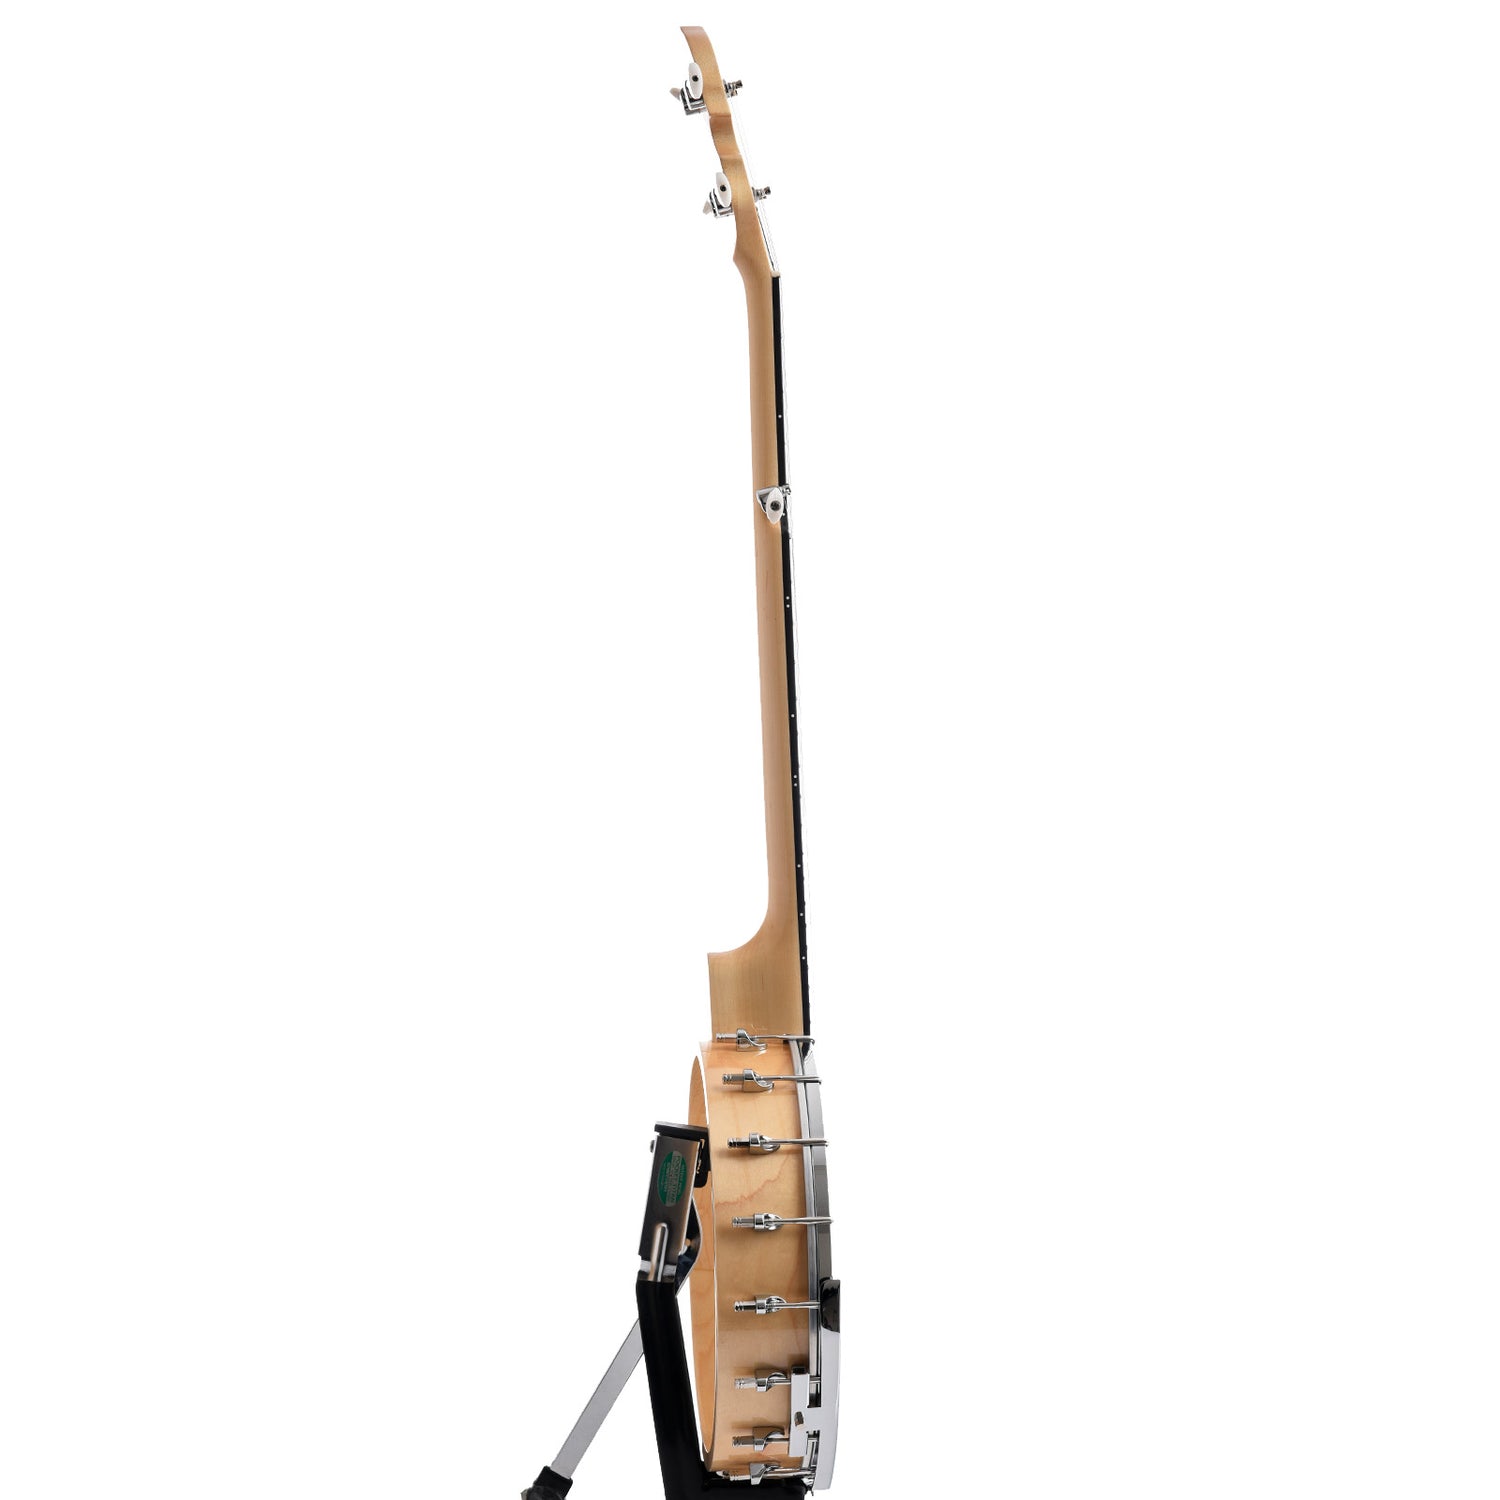 Full Side of Gold Tone CC-100 Cripple Creek Openback Banjo